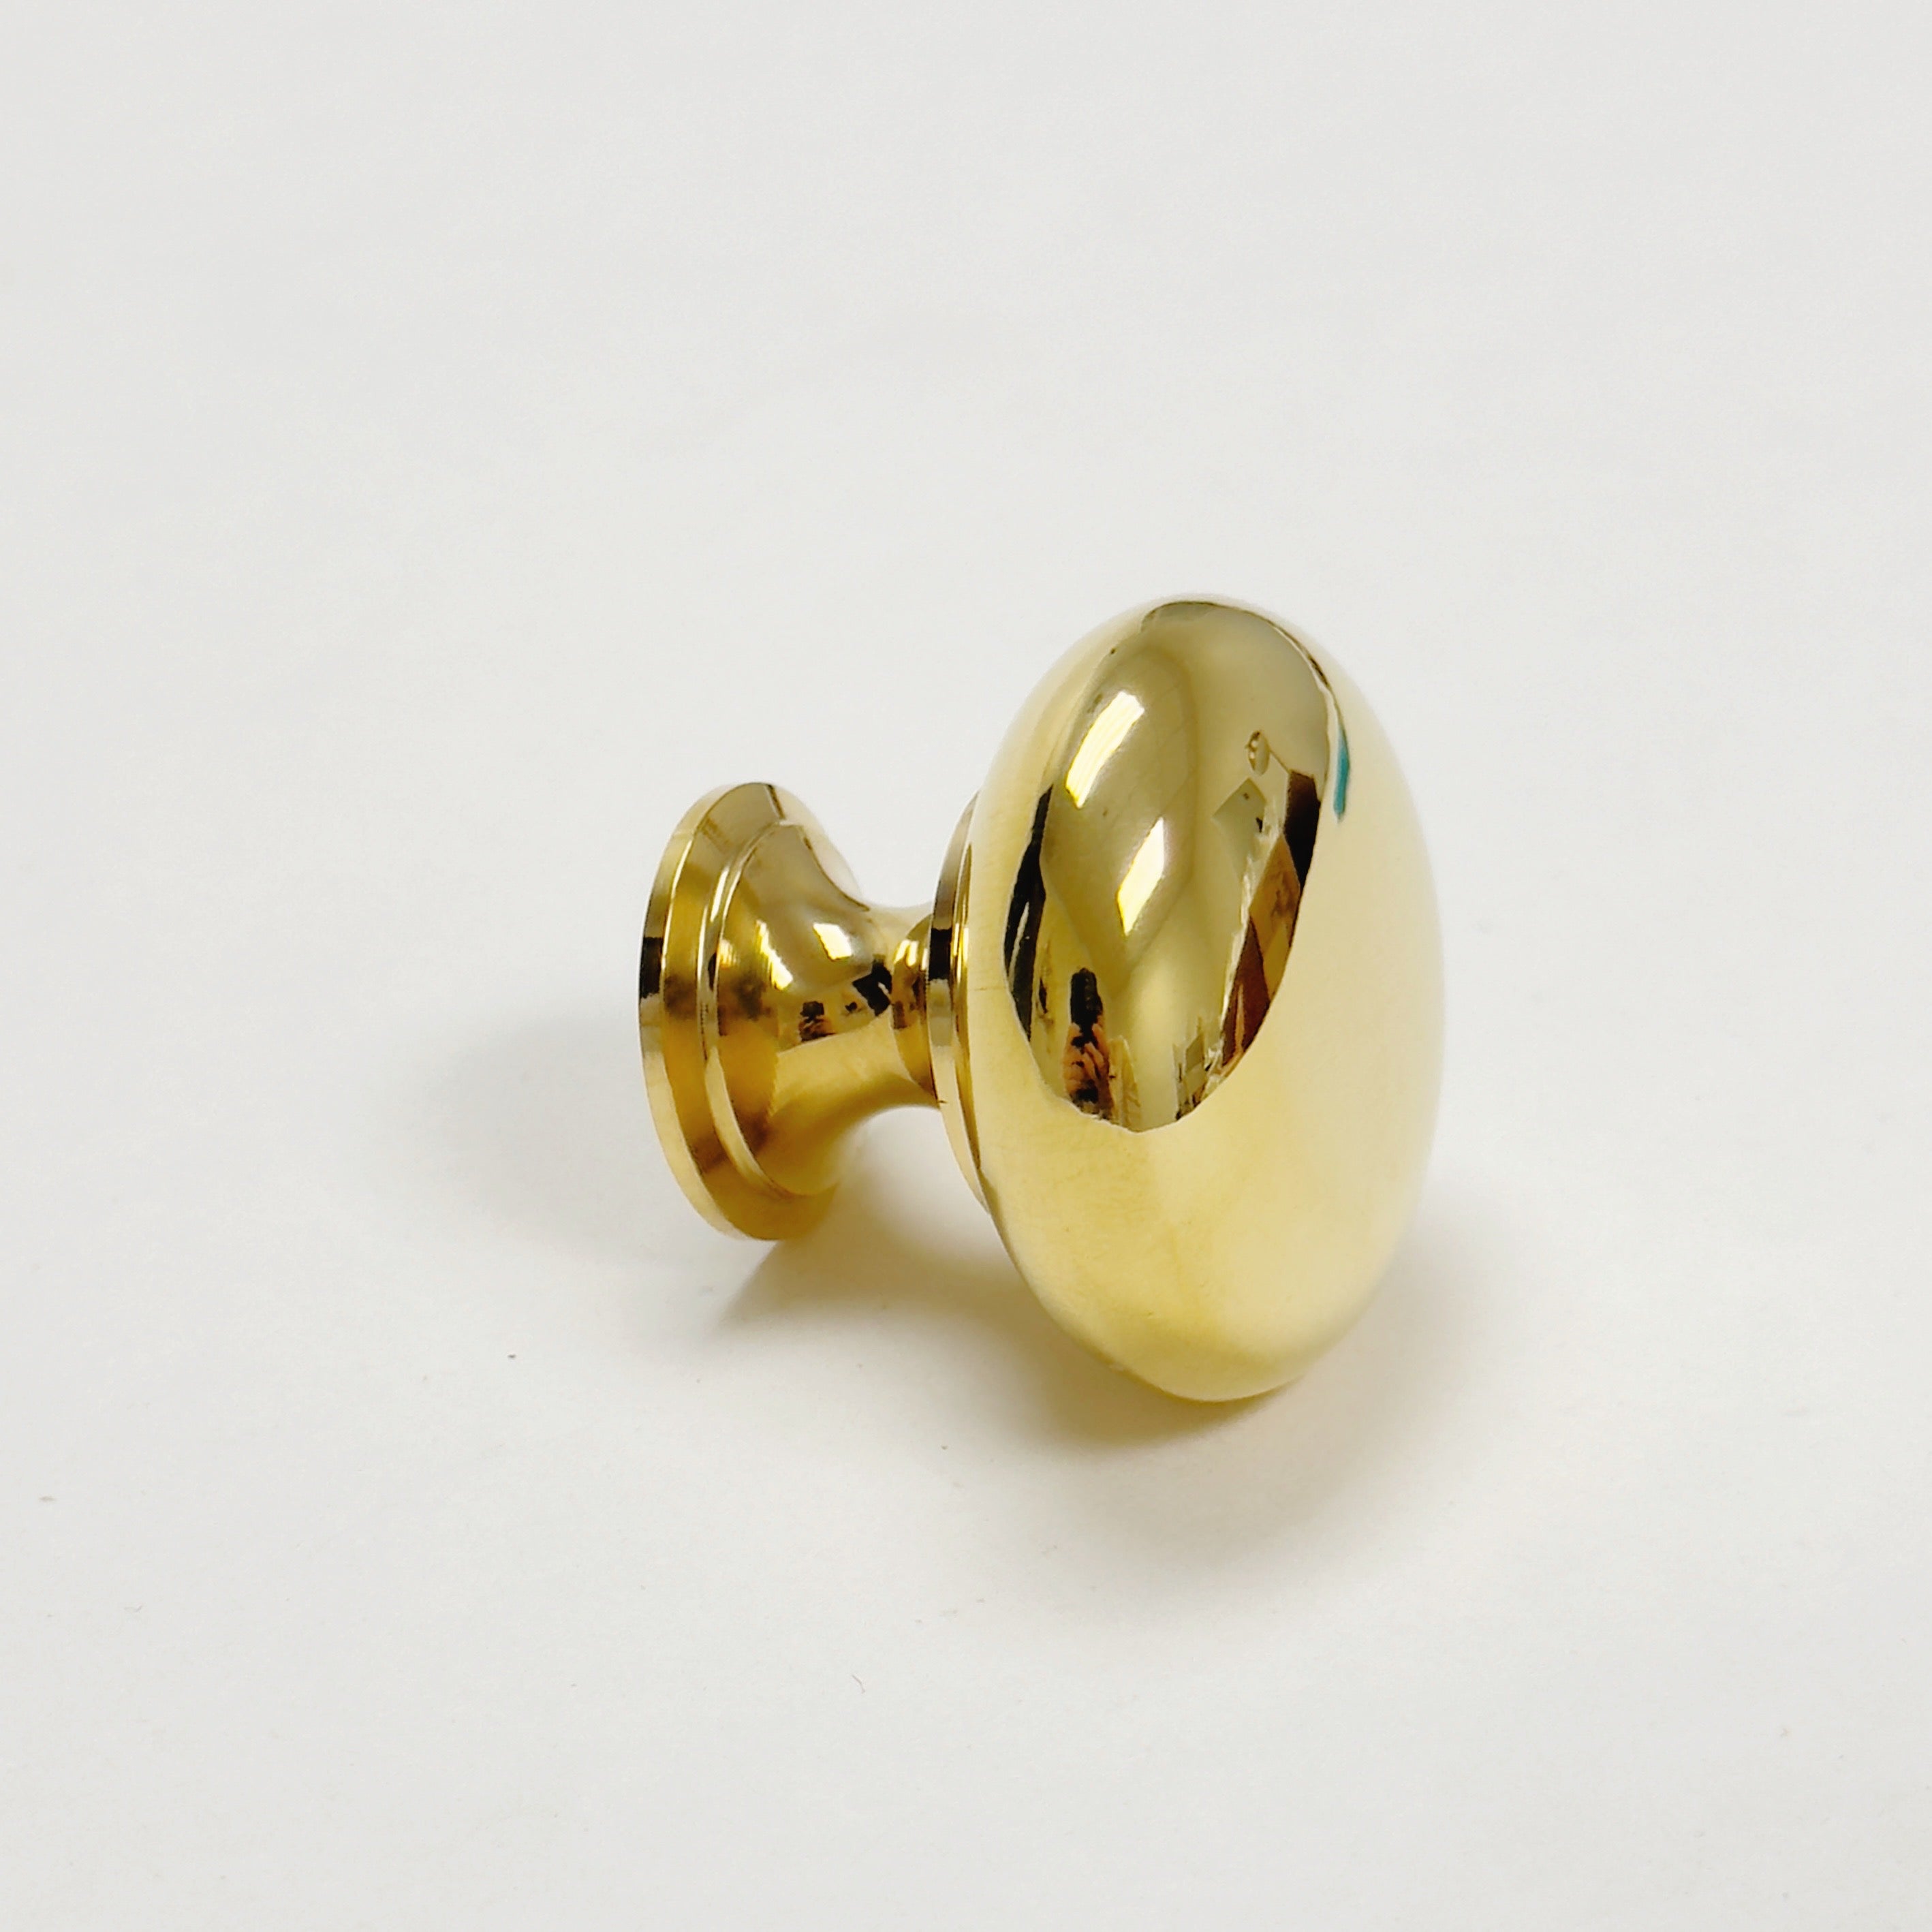 Unlacquered Brass "Eloise" Round Cabinet Knob - Industry Hardware